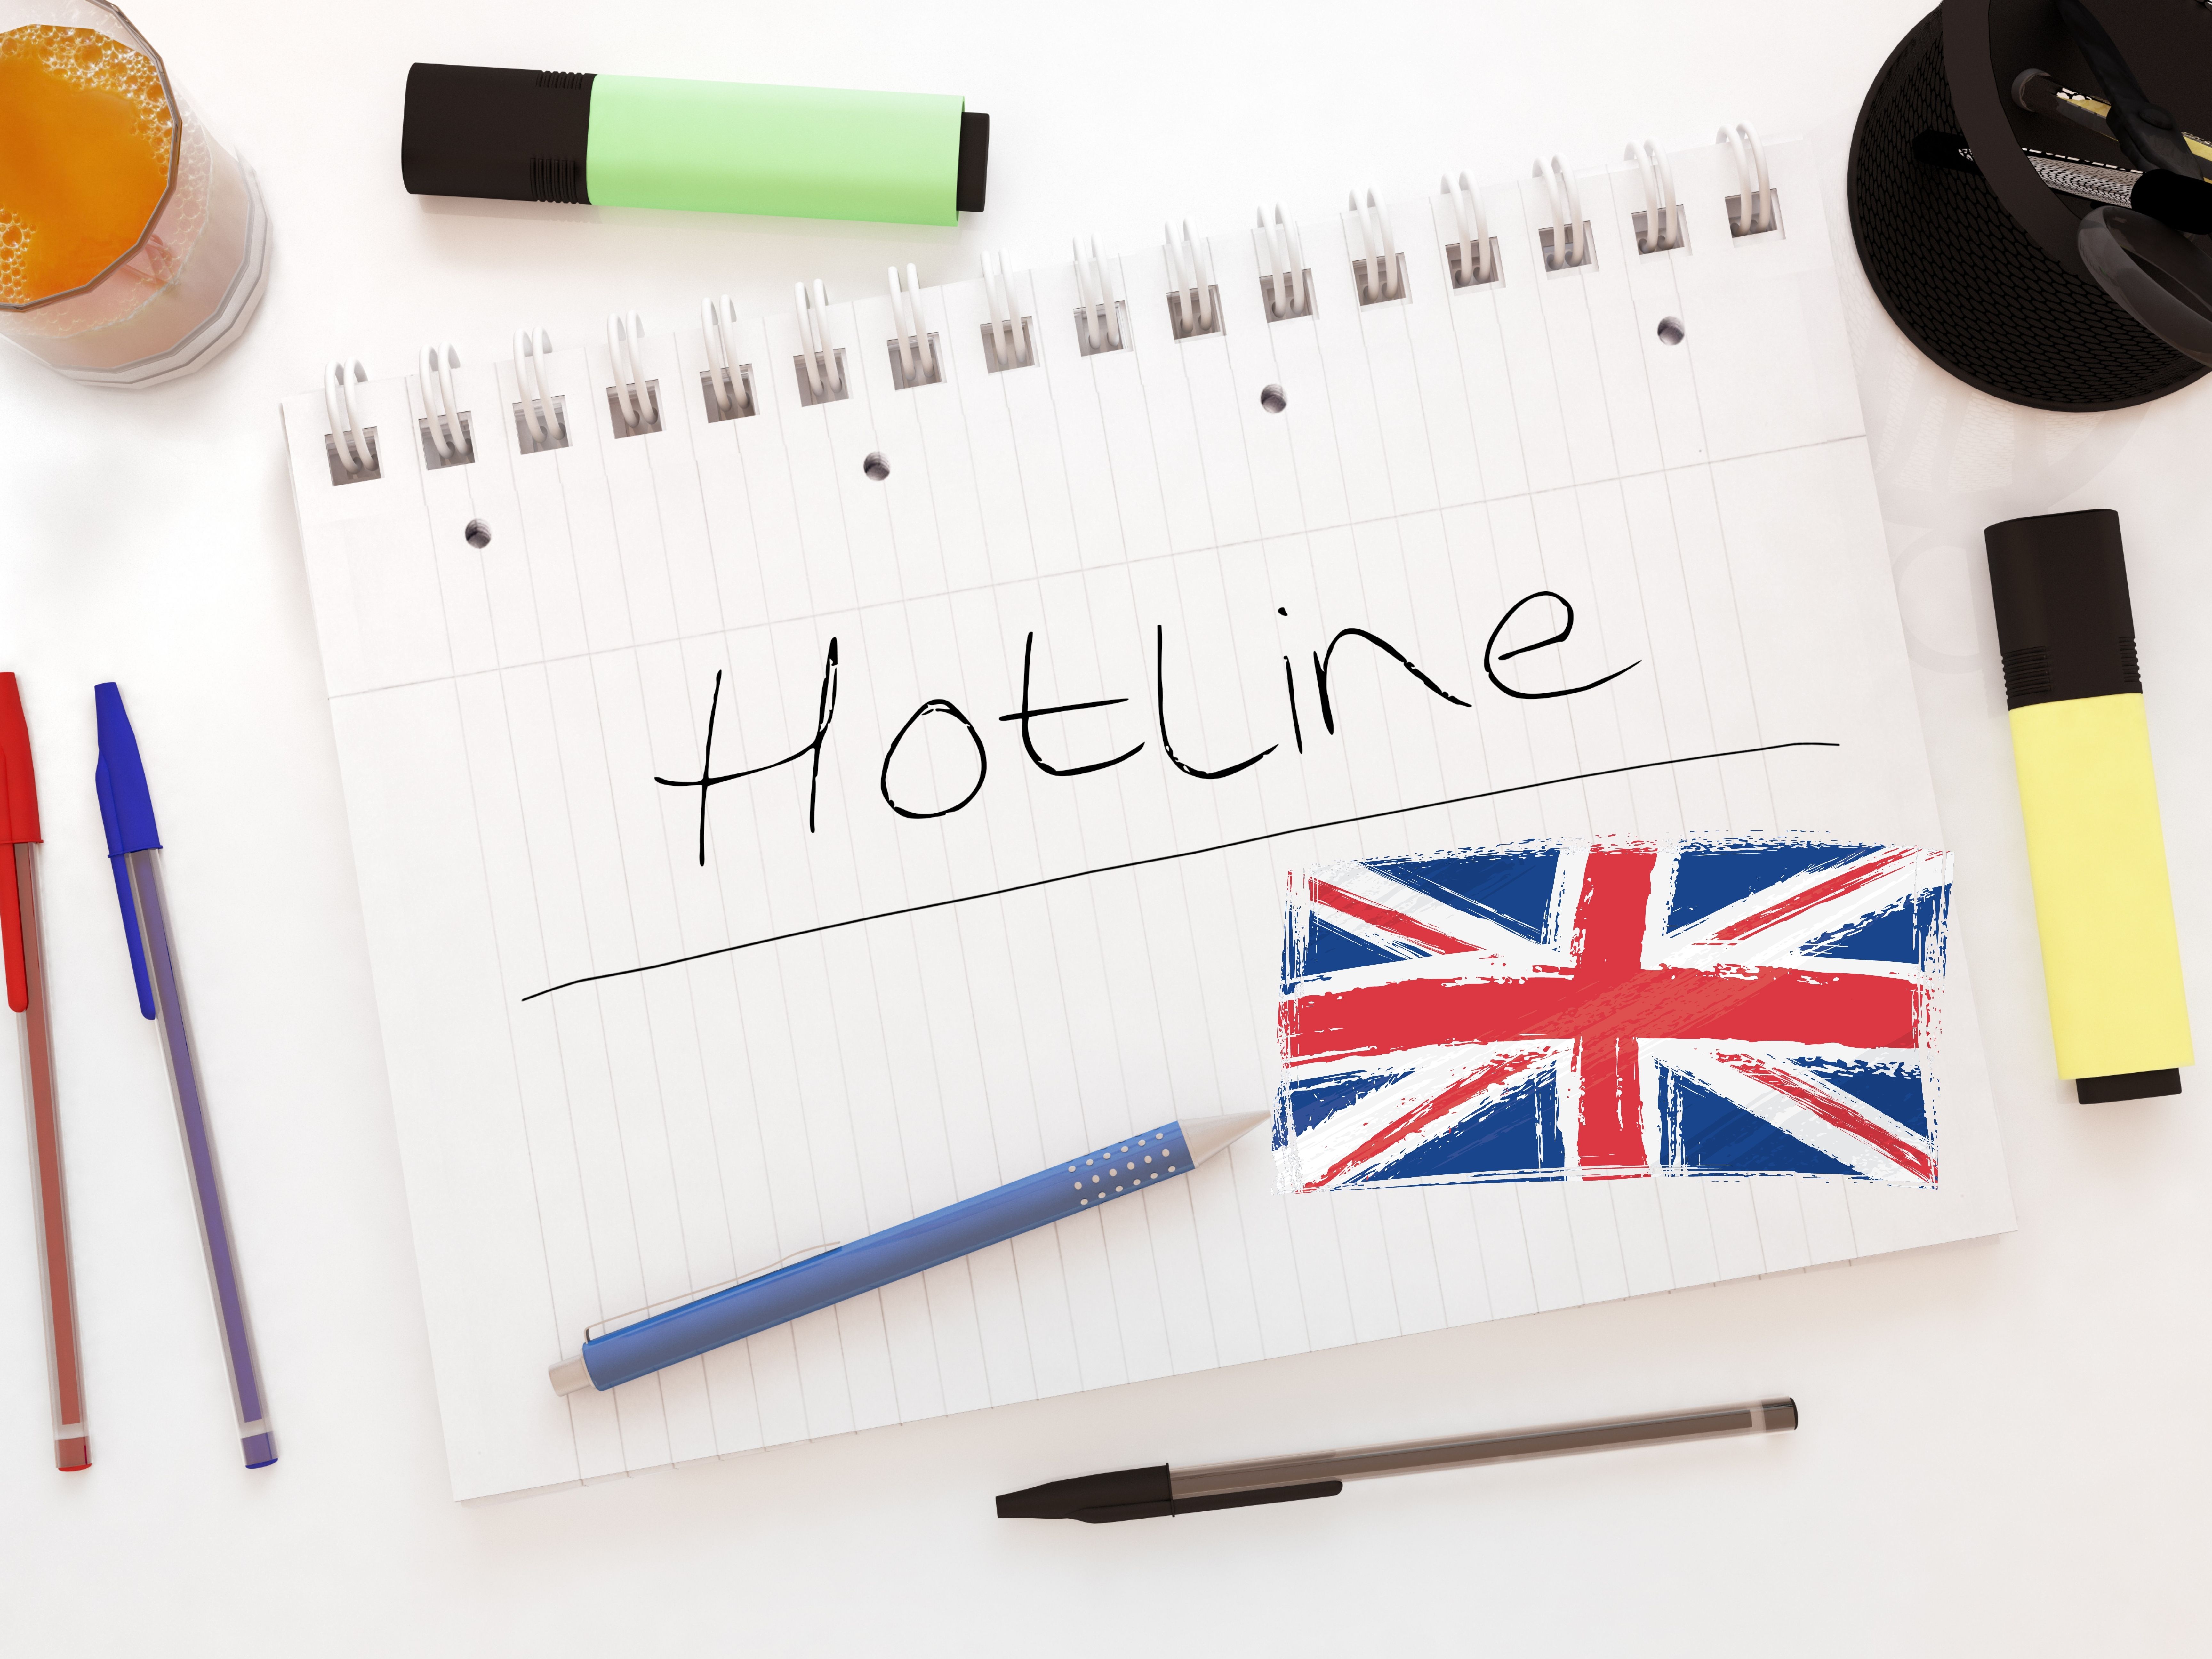 Hotline Poster United Kingdom